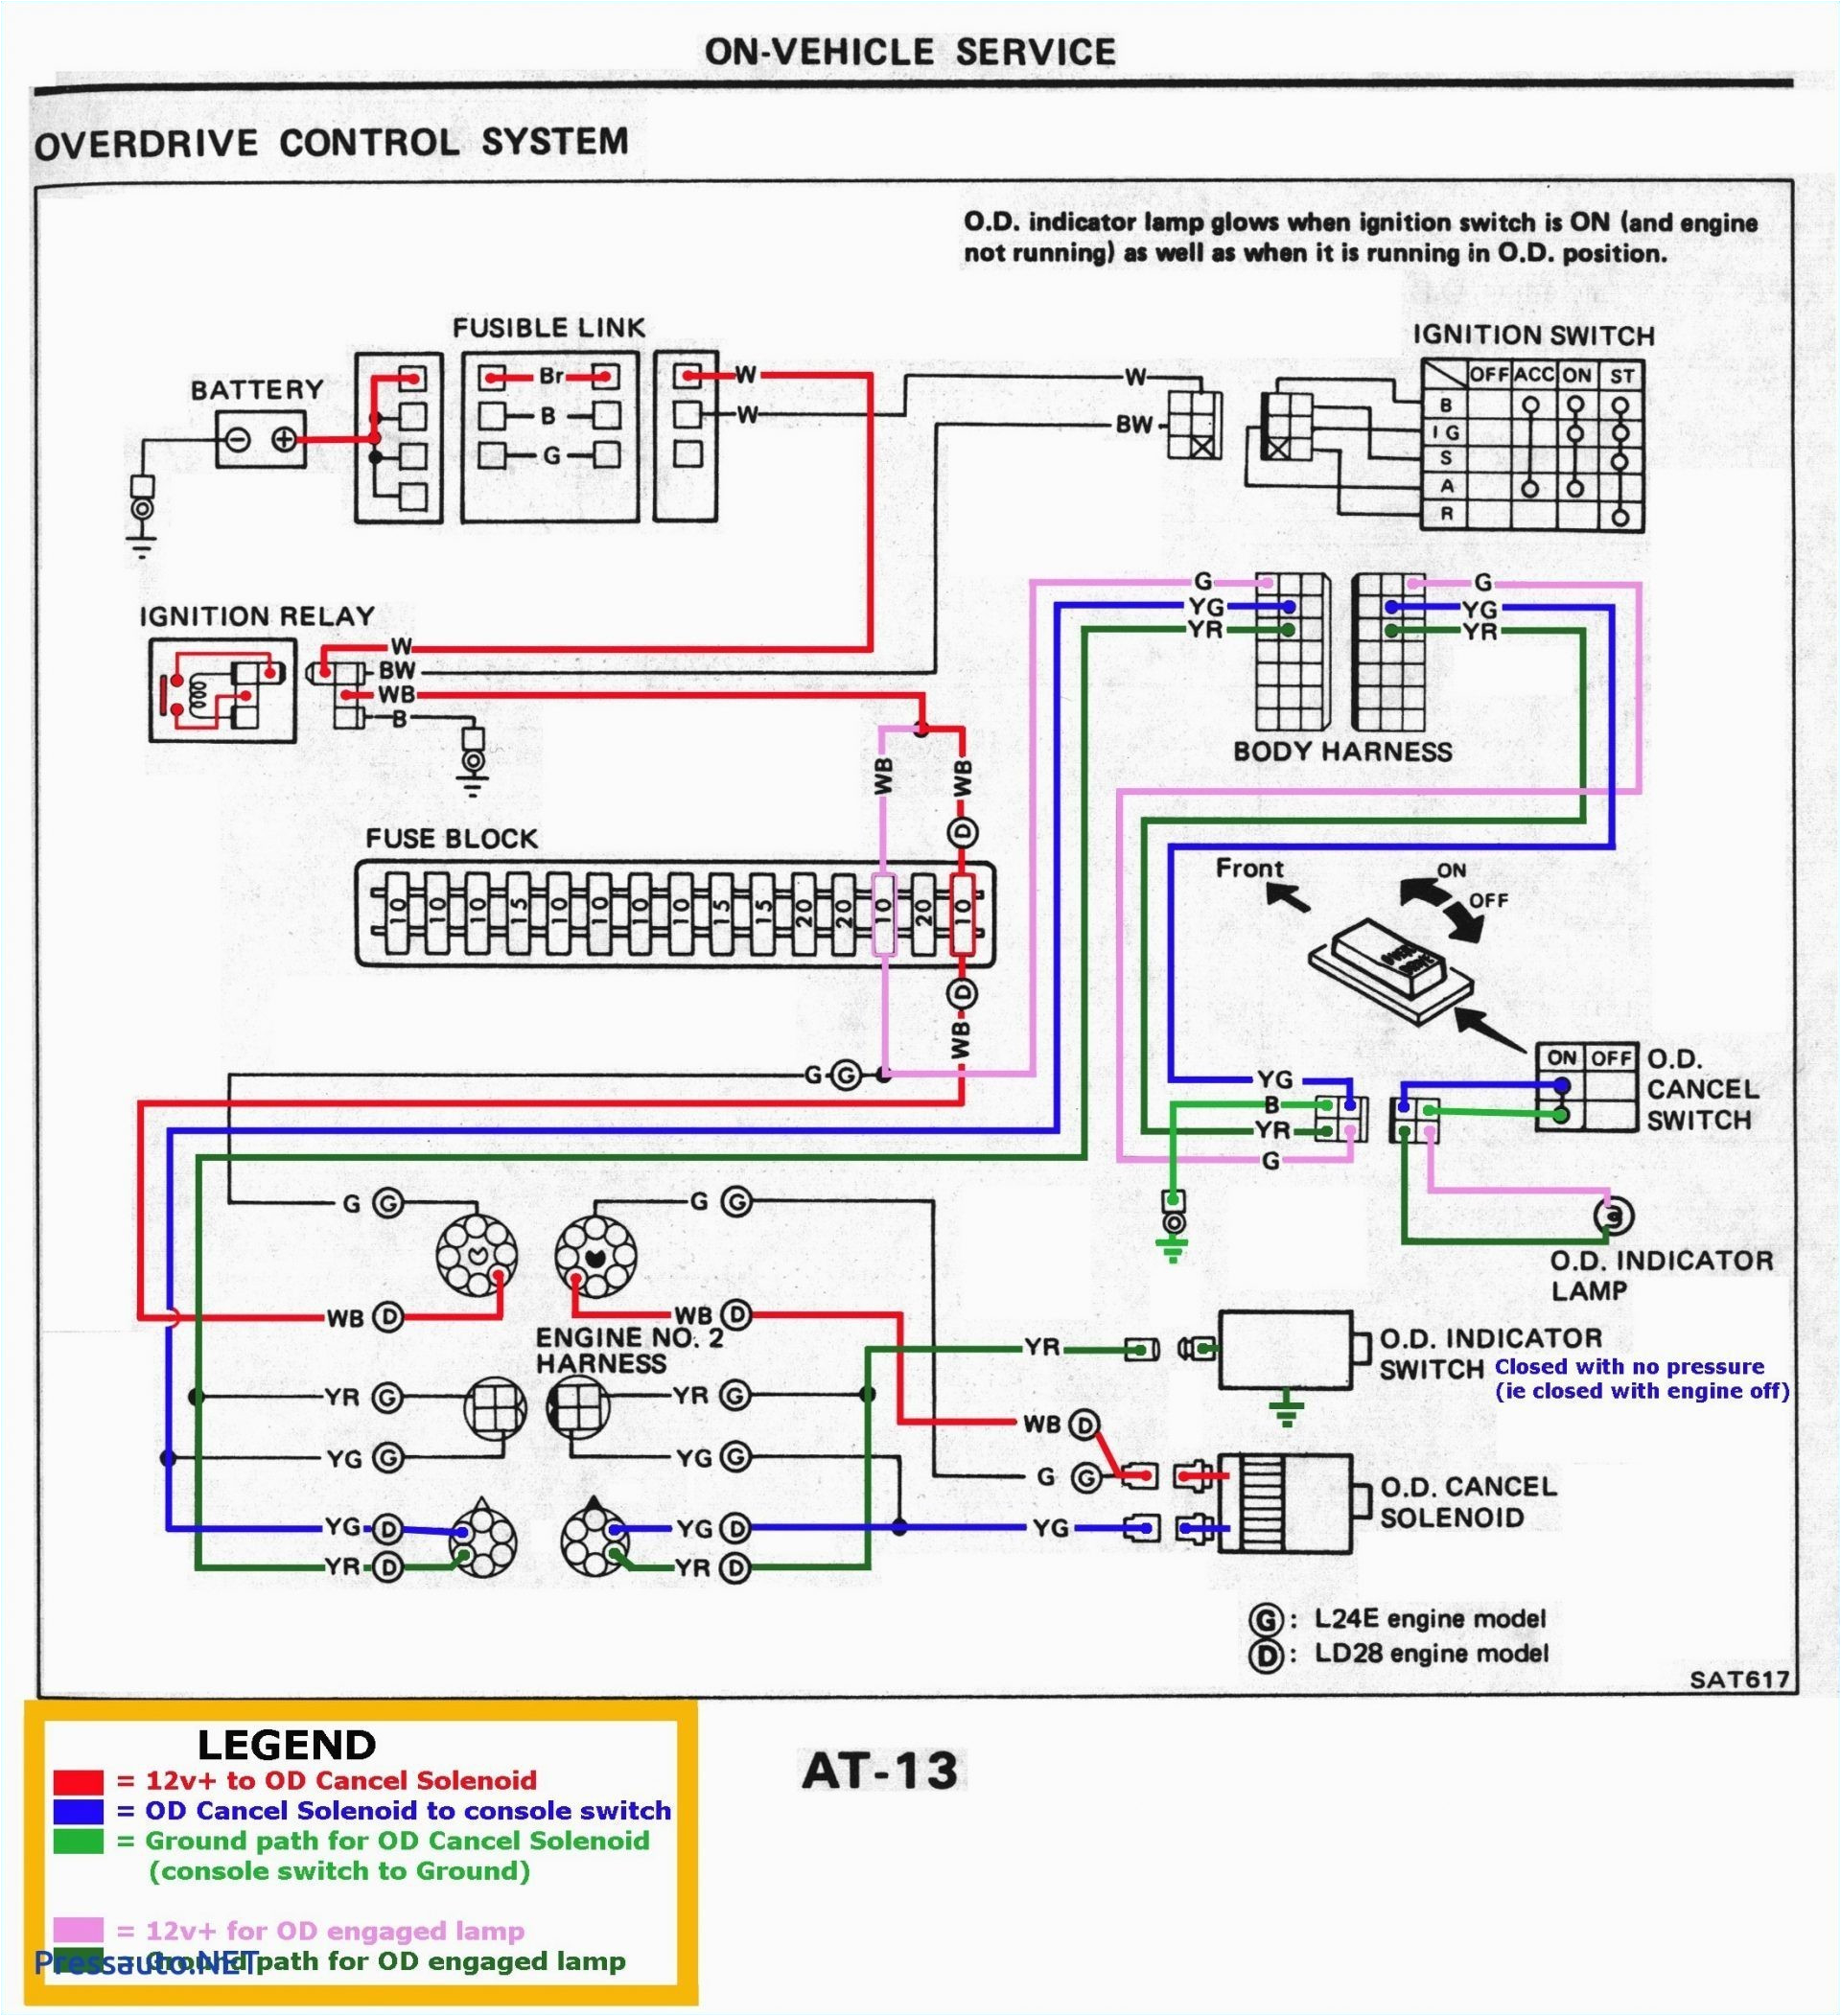 02 dodge ram sel wiring harness diagram wiring diagram post 02 dodge 2500 tow package wiring diagram